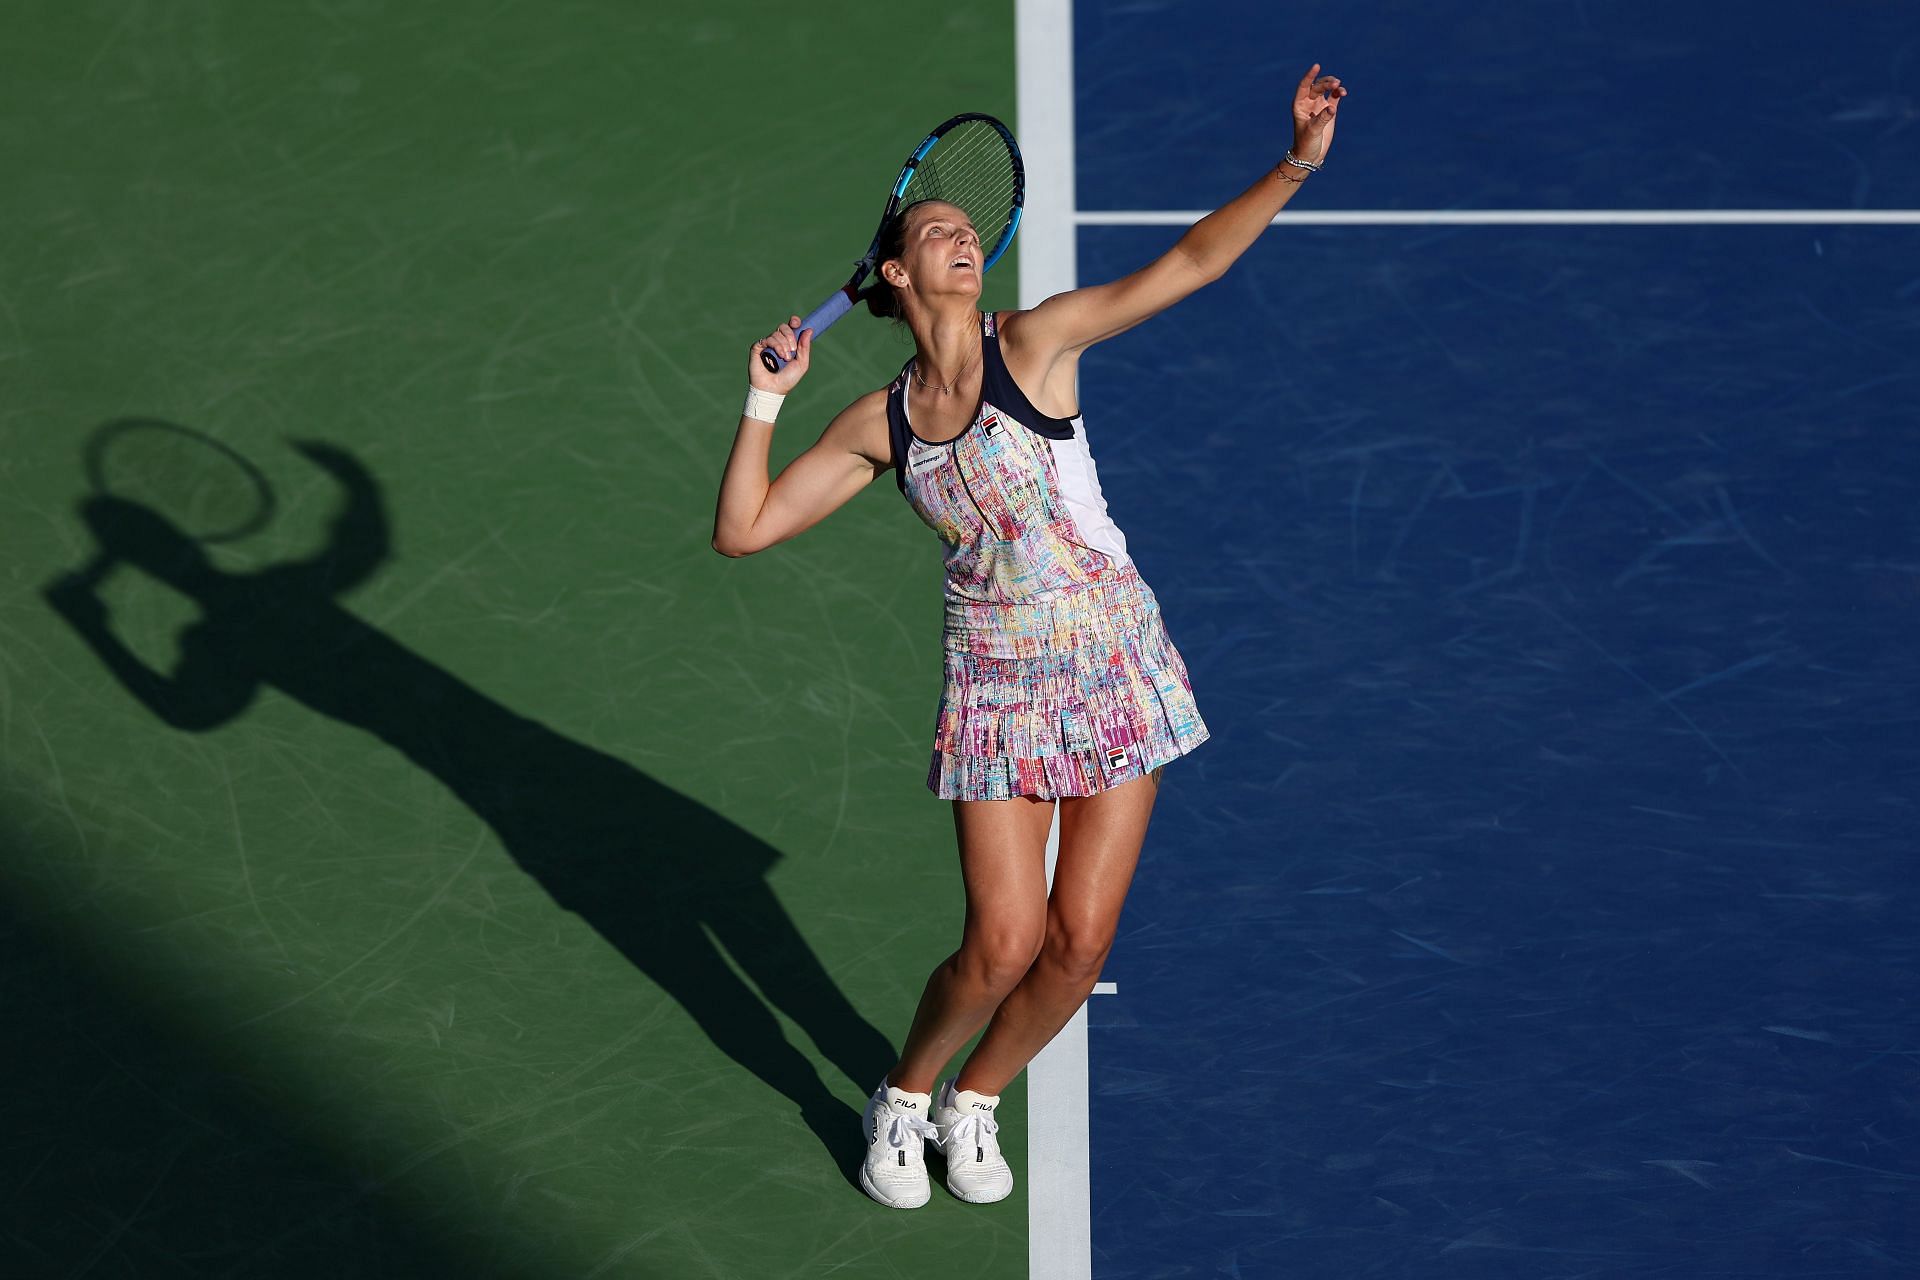 Karolina Pliskova serves during her first-round match at Dubai.